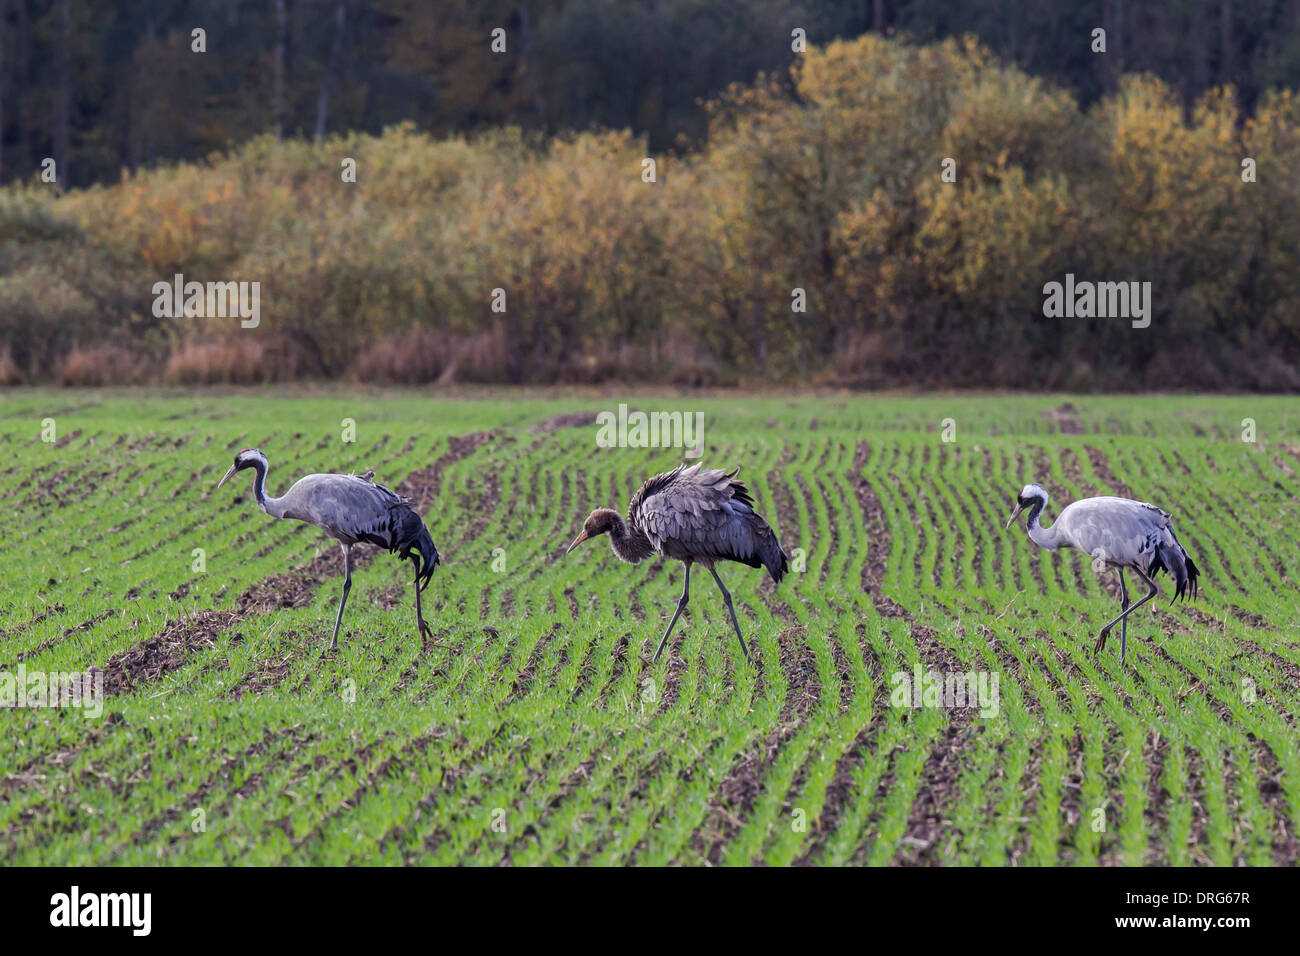 Grauer Kranich, Grus grus, Eurasian Crane, Common cranes, family walking on winter crop field, Germany Stock Photo